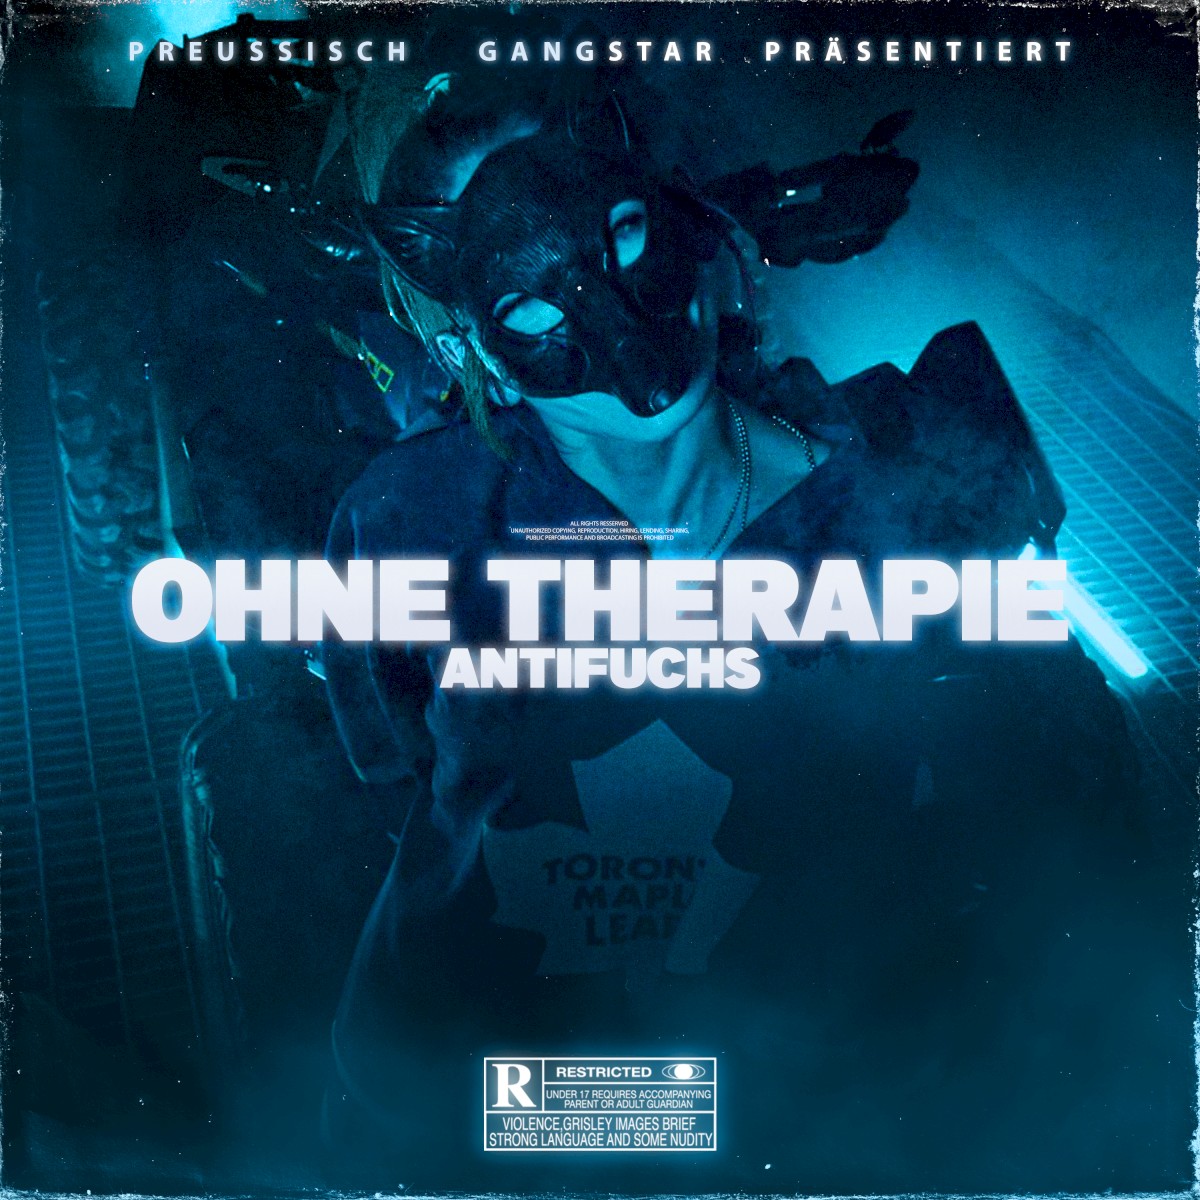 Release “Ohne Therapie” by Antifuchs - Cover Art - MusicBrainz